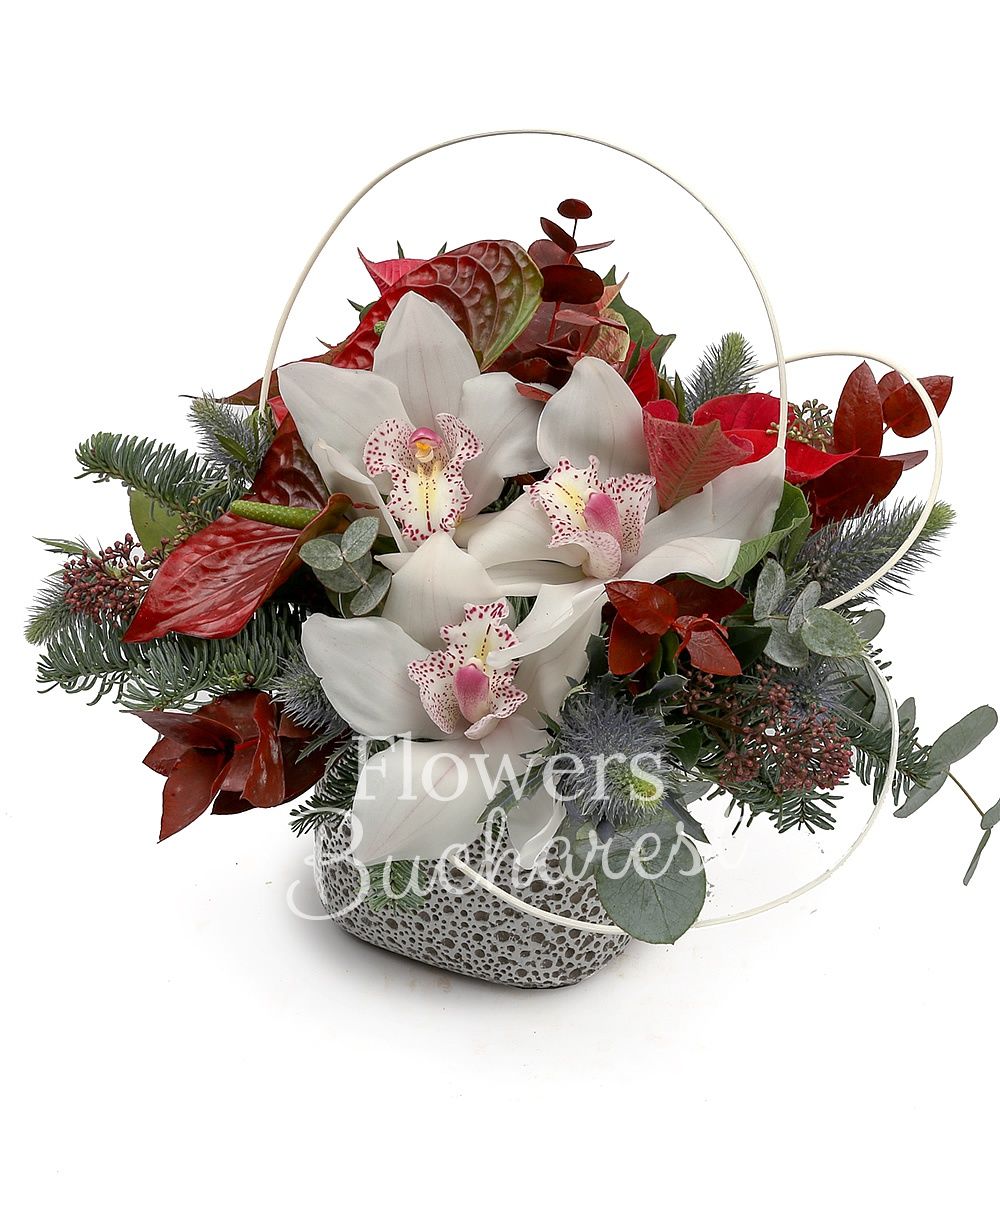 1 white cymbidium, 2 red anthurium, poinsettia, fir, greenery, vase